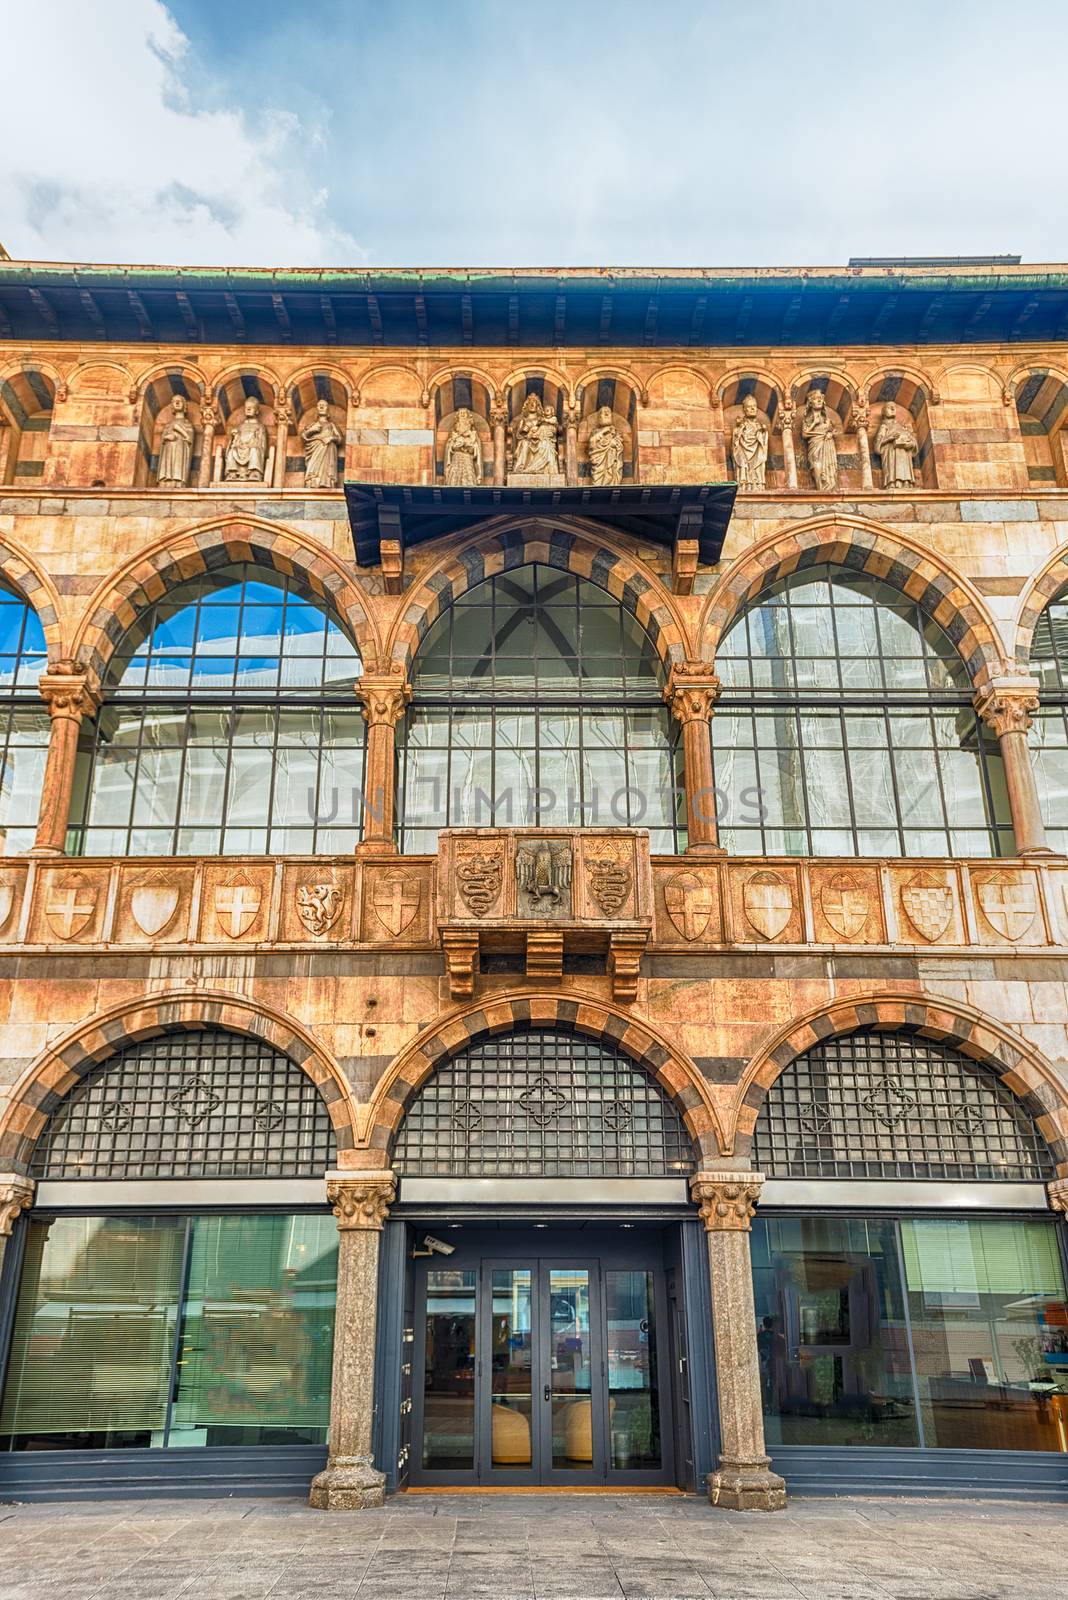 Loggia degli Osii, historical building in Piazza Mercanti, Milan by marcorubino